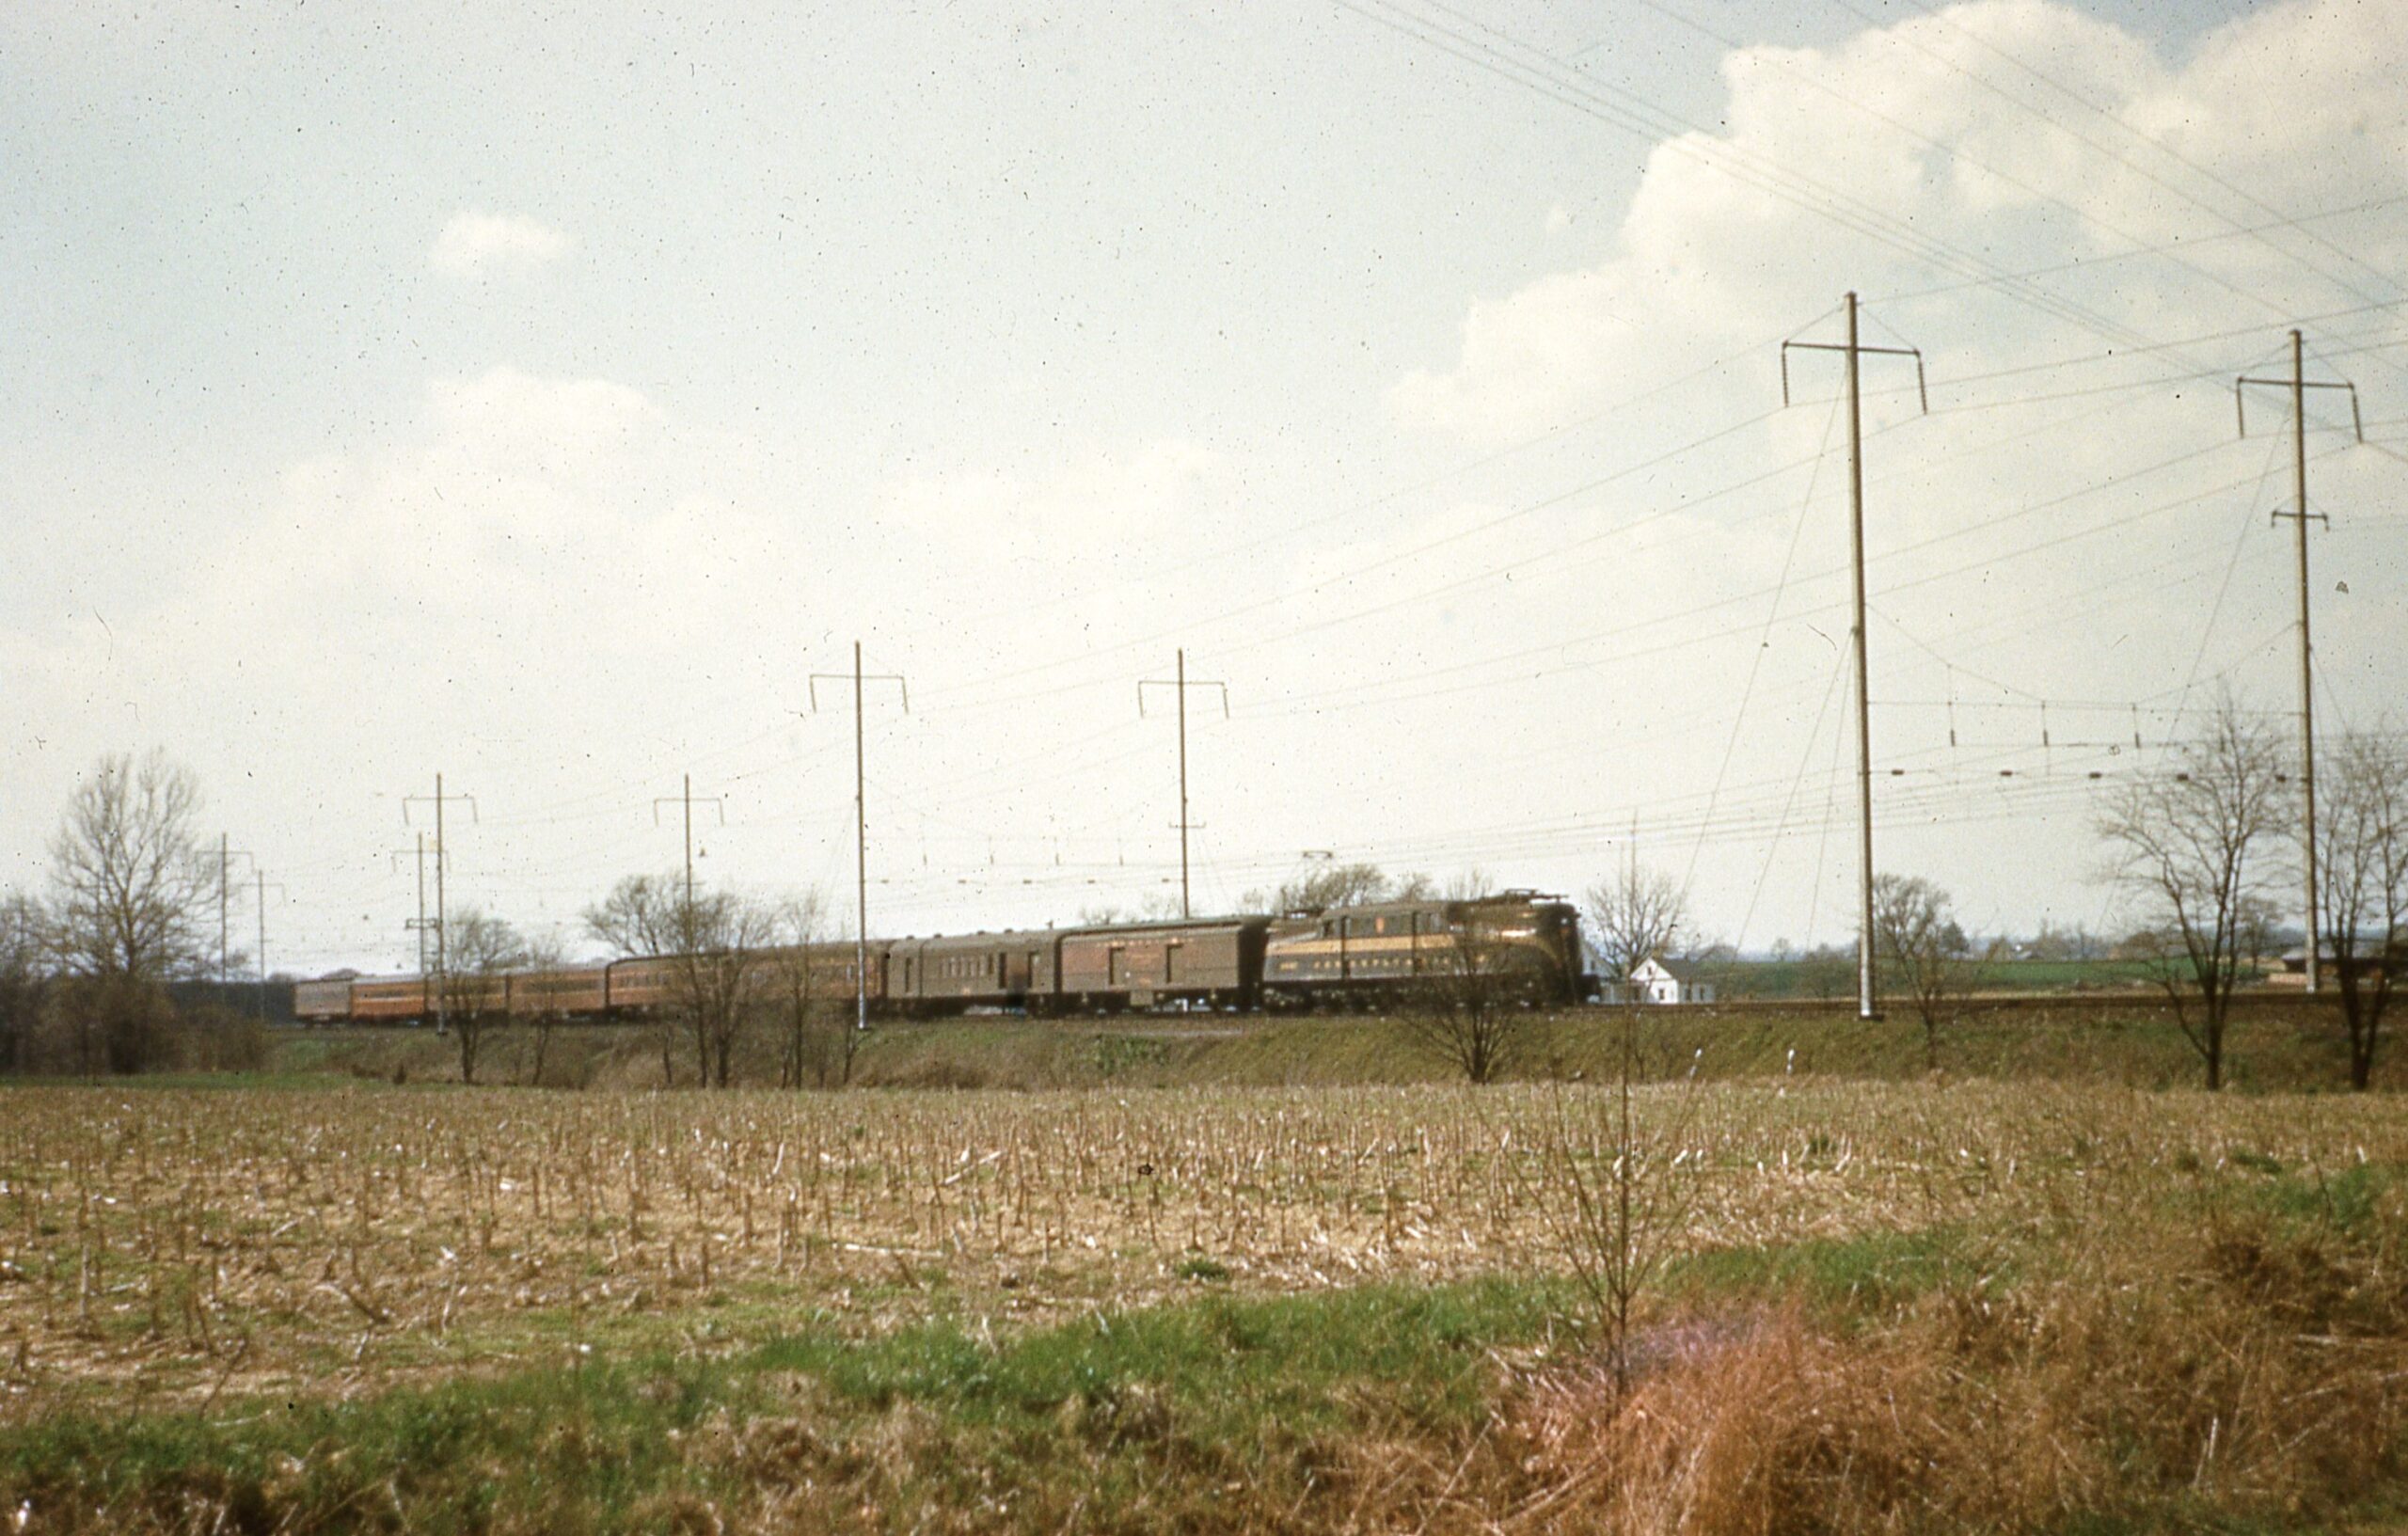 Pennsylvania Railroad | Greenfield, Pa. (Lancaster County) | GG1 | April 1950 | Bill Echternacht, Jr.